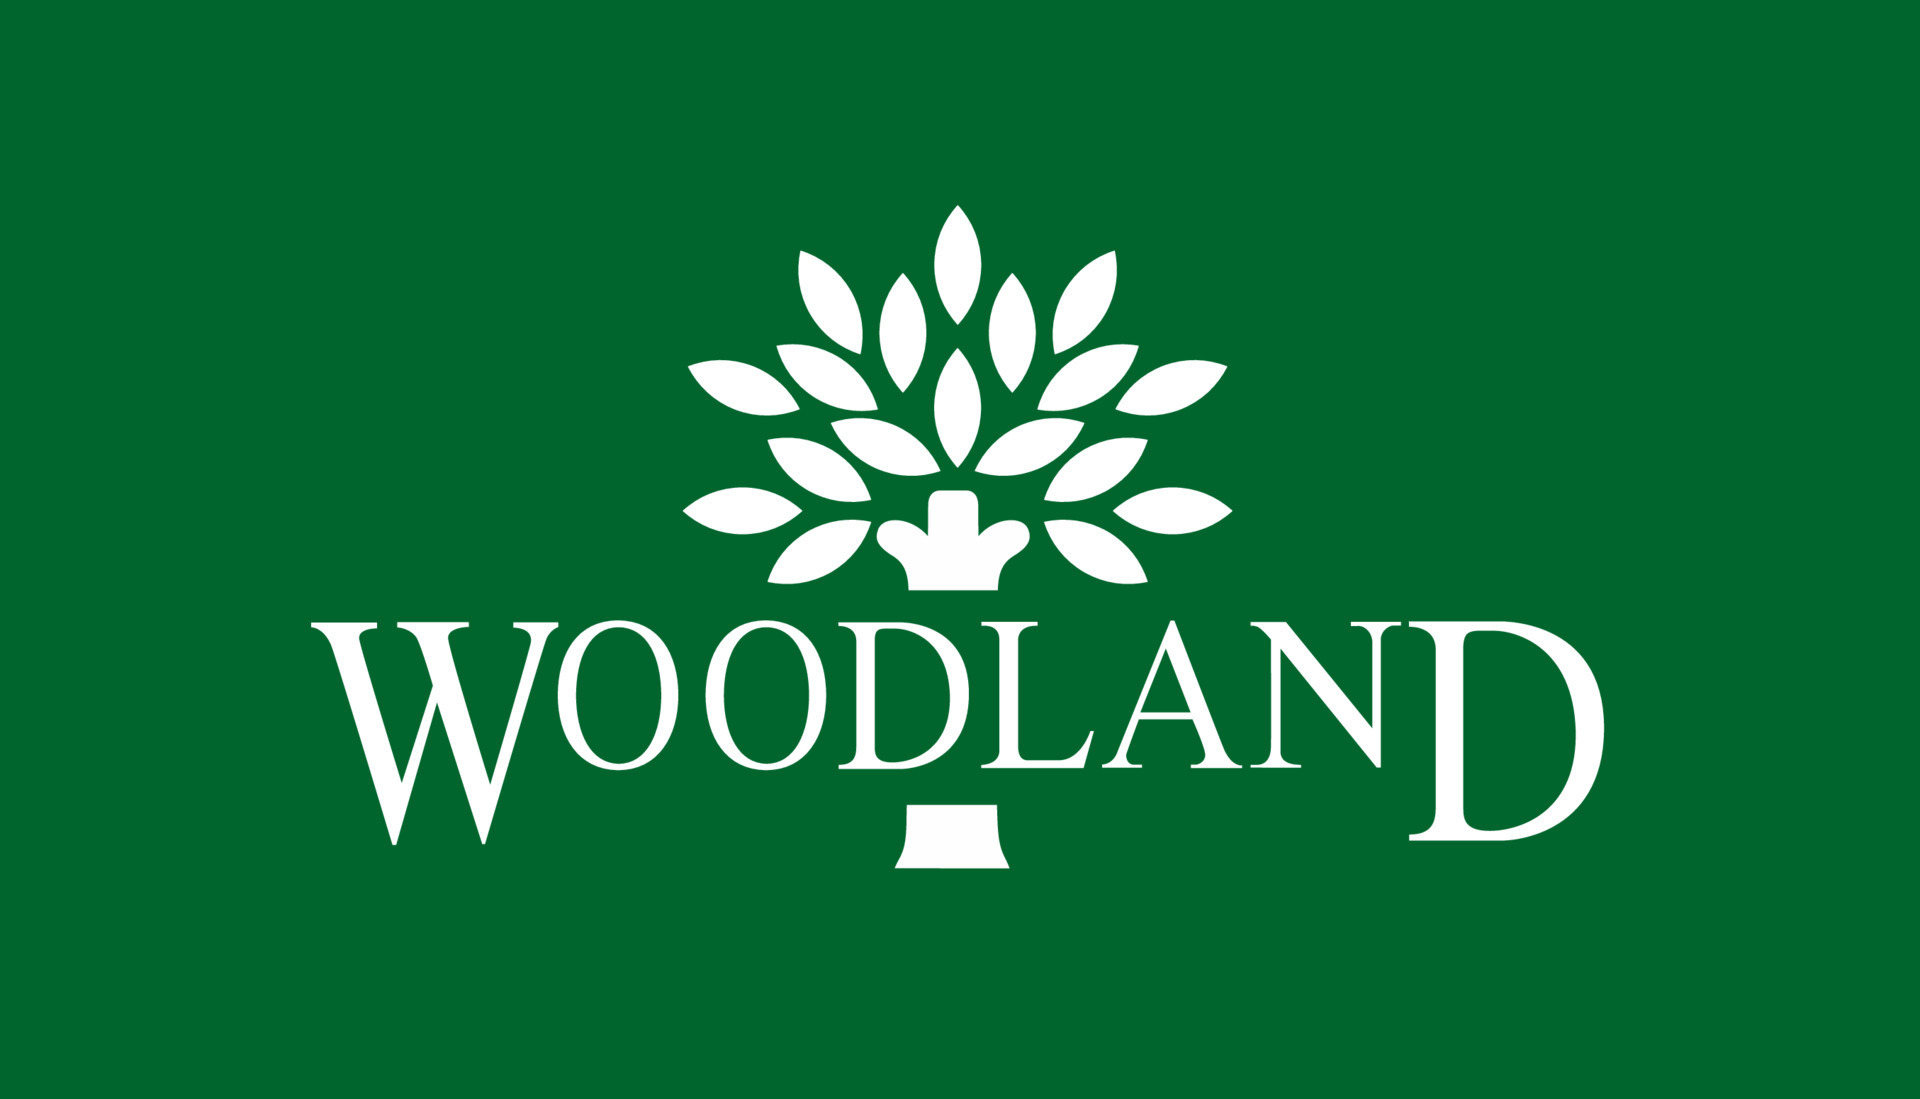 Share more than 222 woodland logo latest